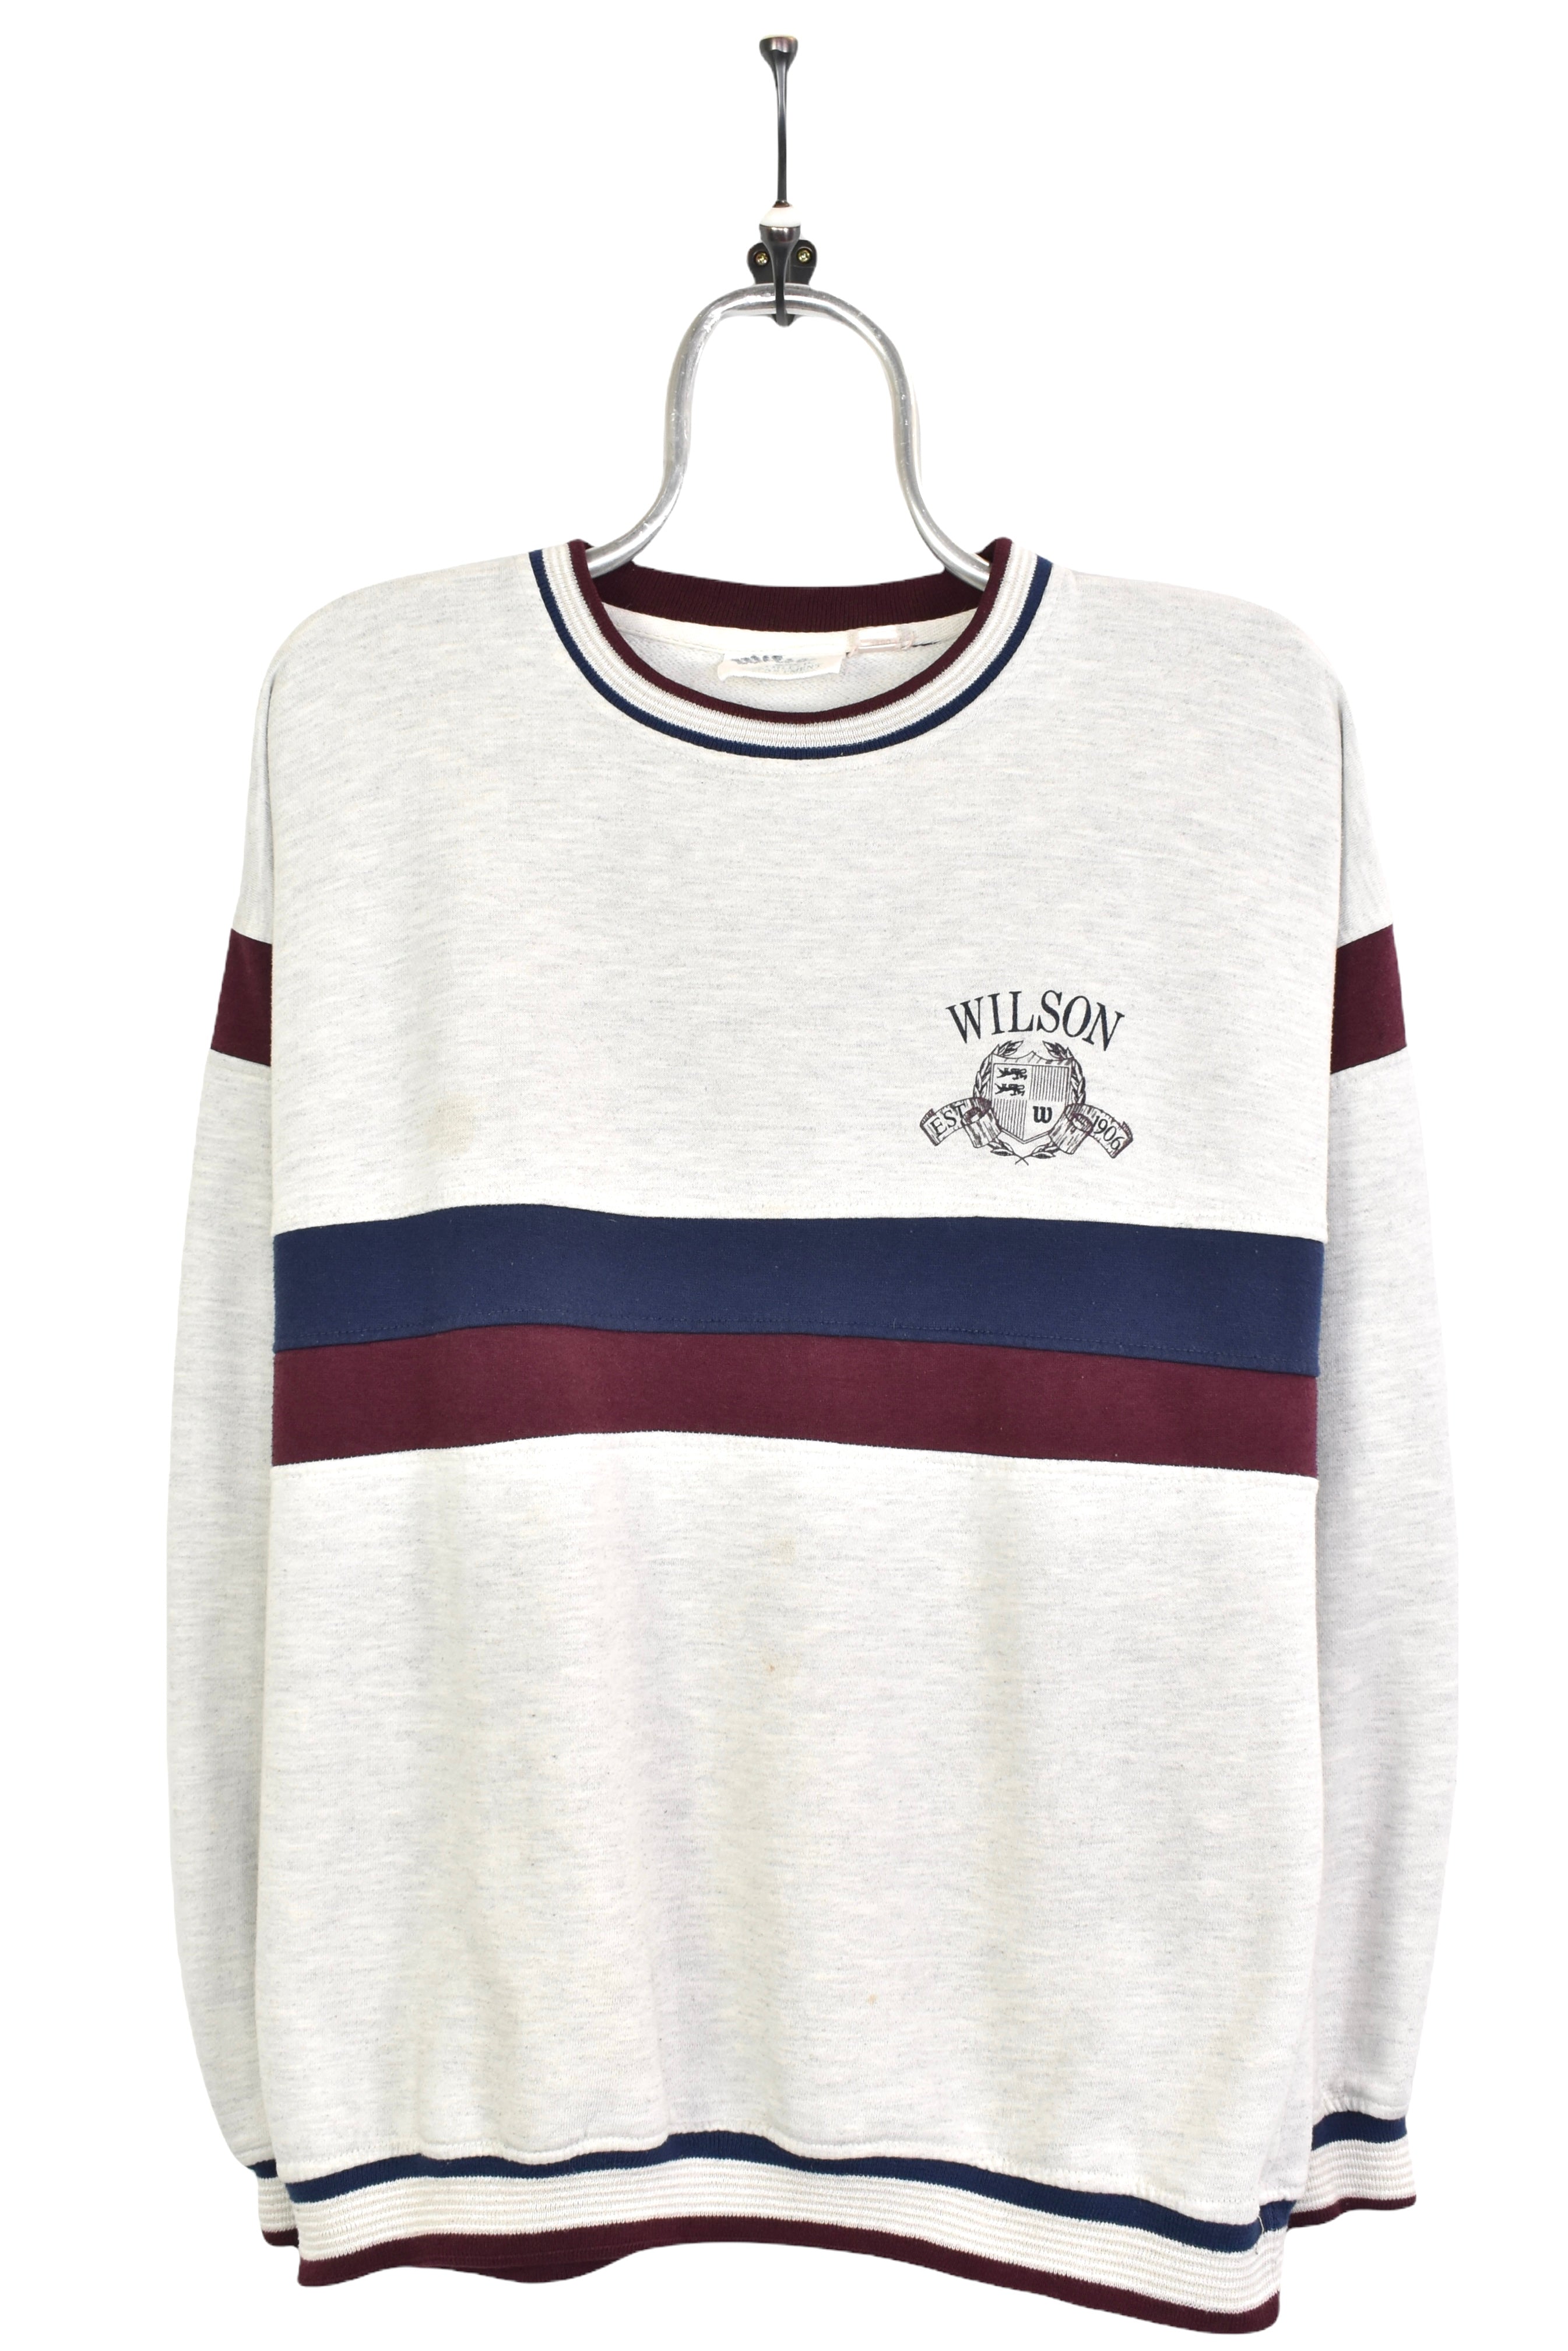 Vintage Wilson sweatshirt, grey graphic crewneck - AU Large WILSON